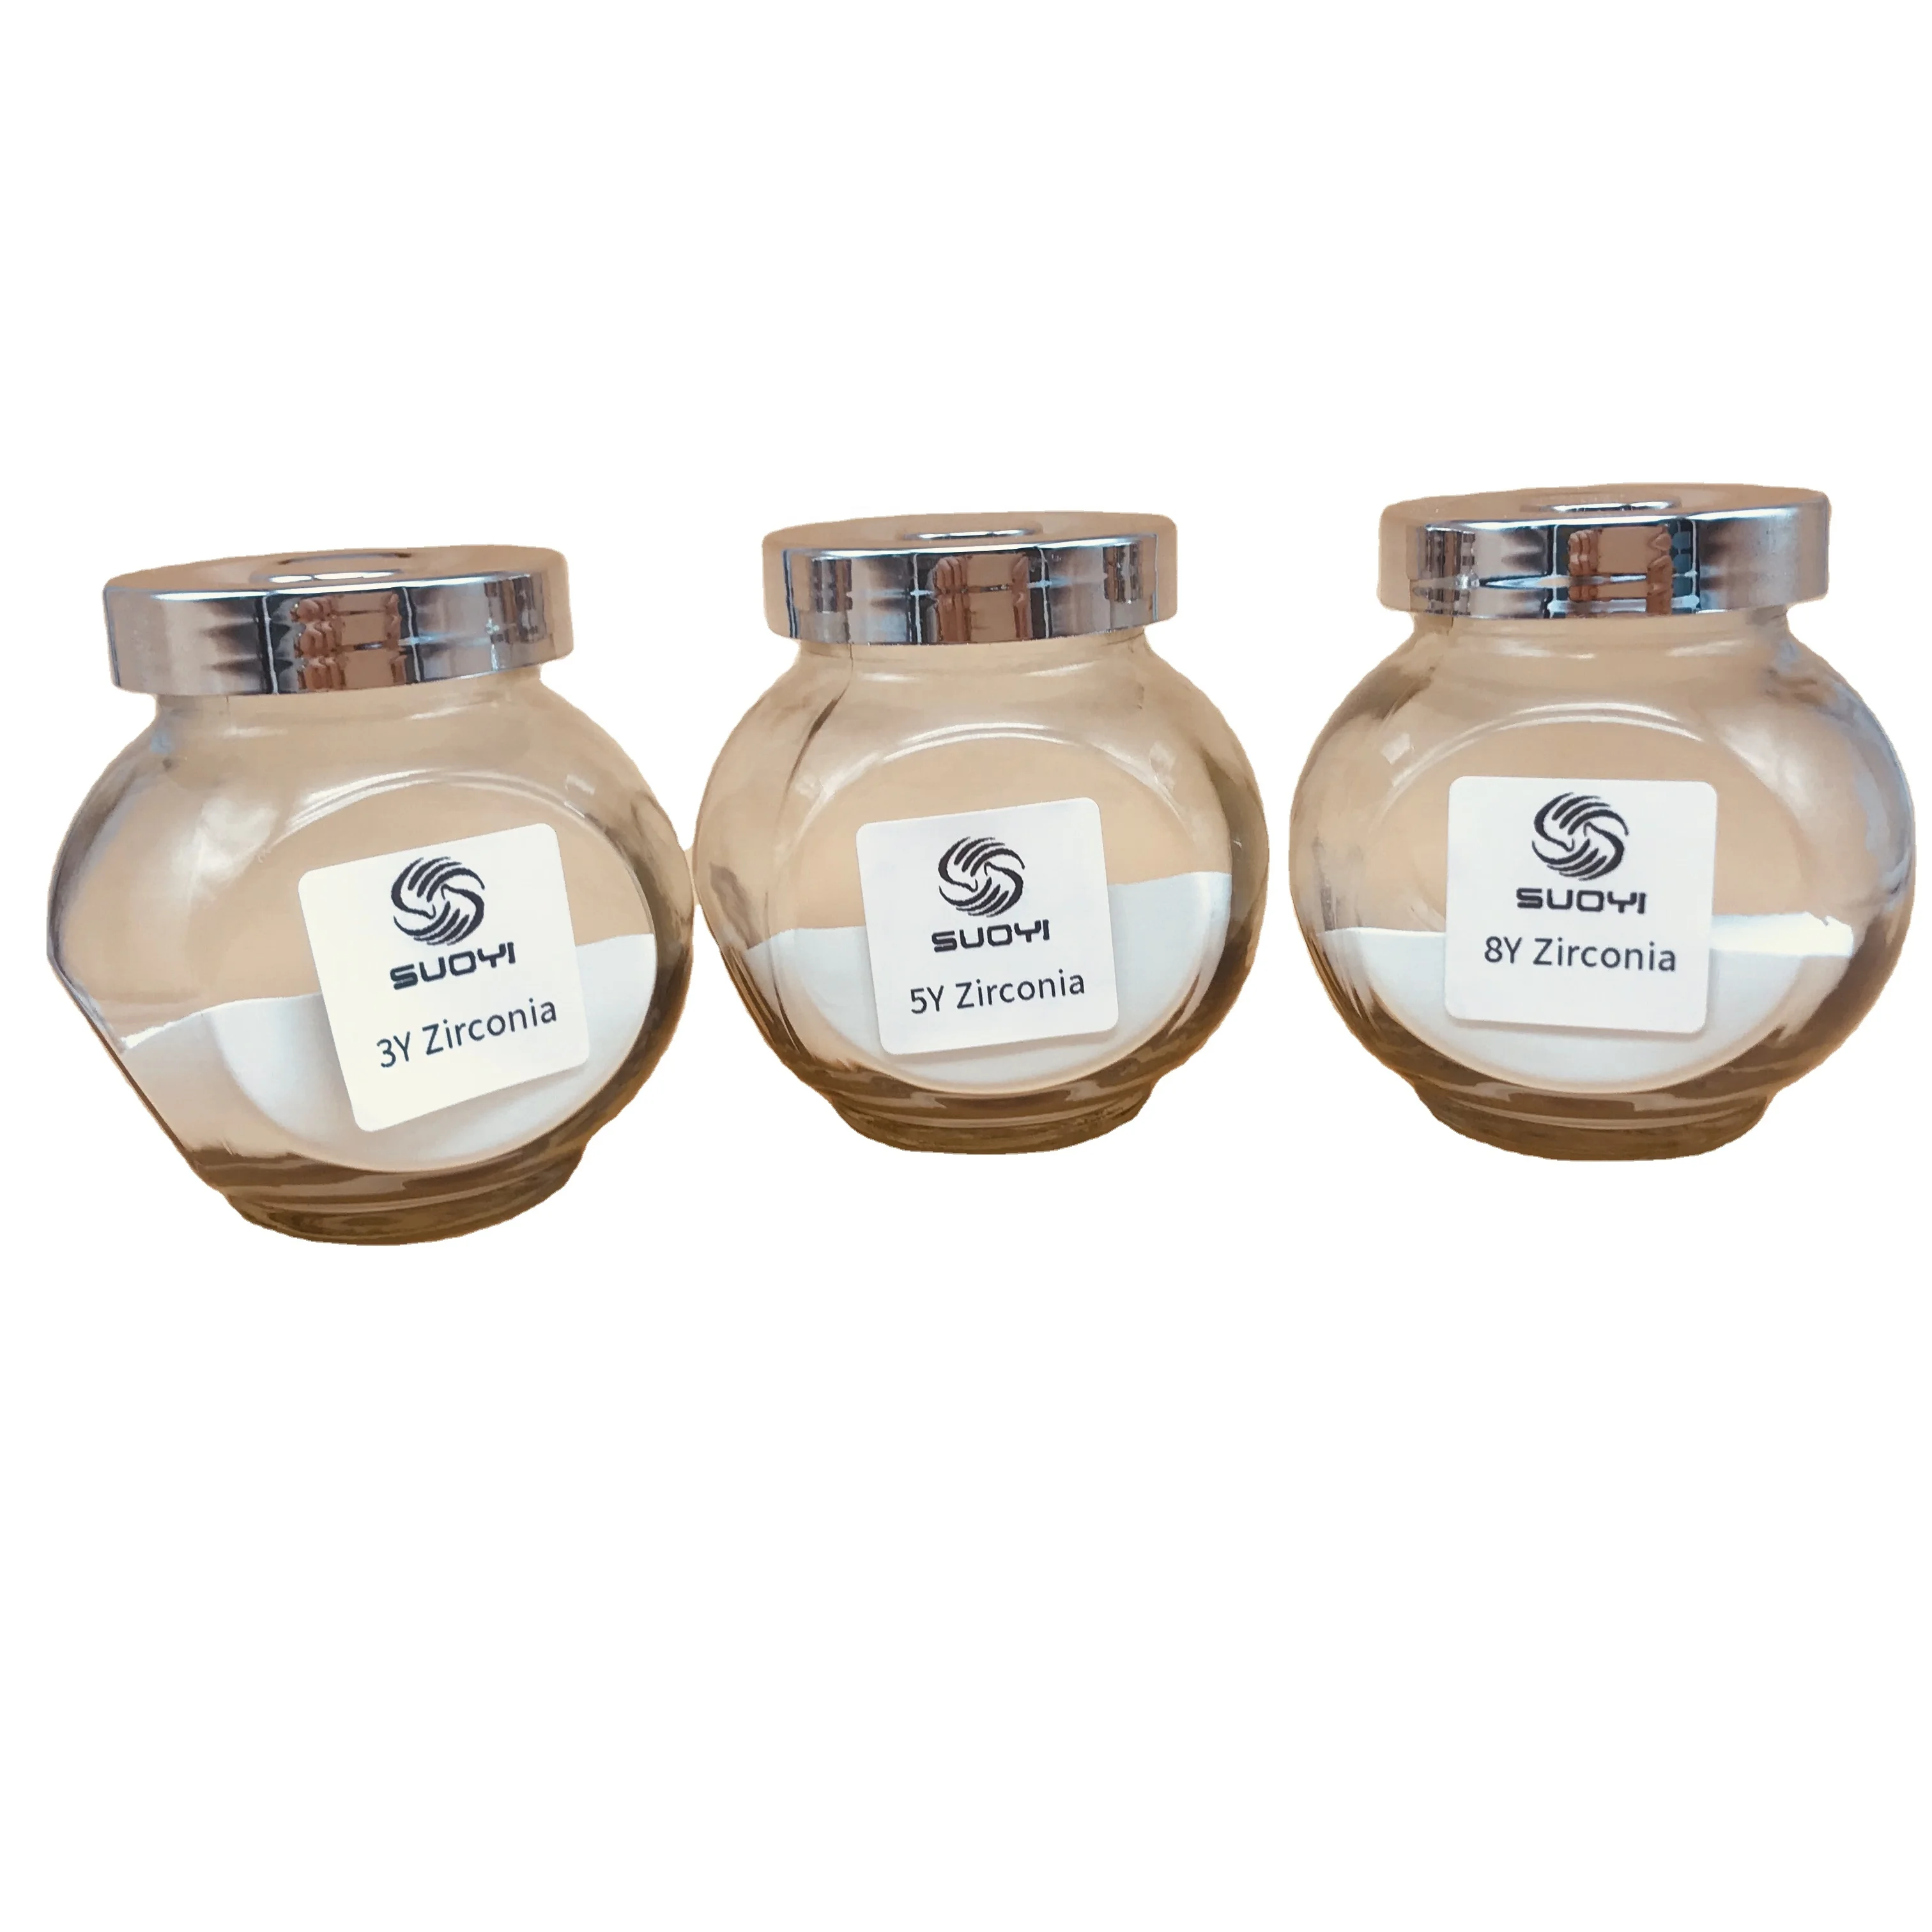 Super fine ultrafine  Yttria Stabilized Zirconia white powder with High Purity for  Crucible ceramics